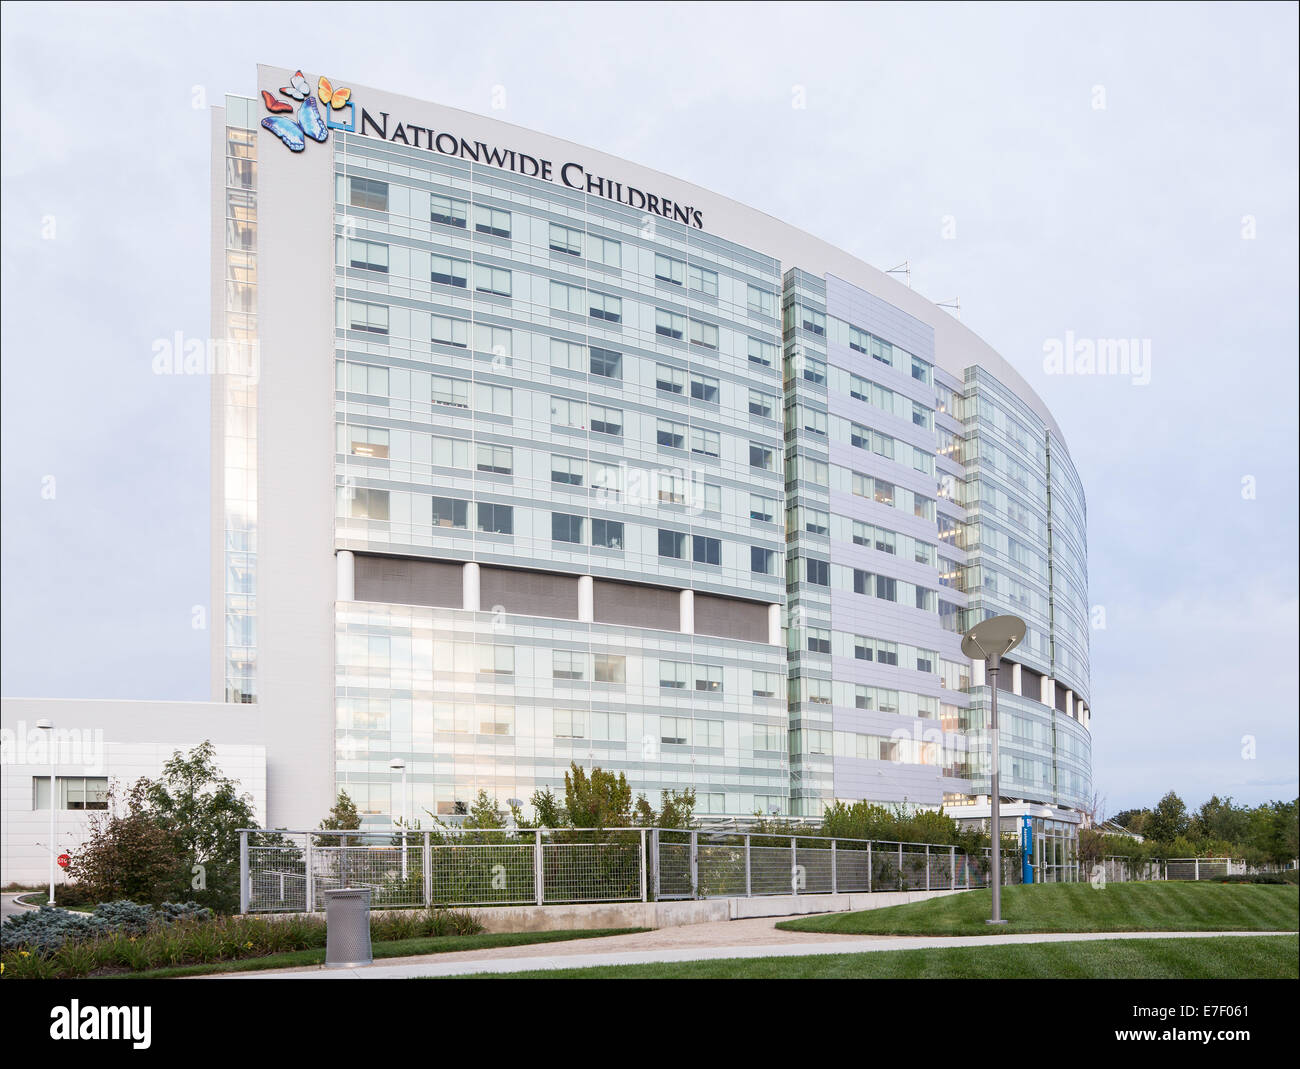 Nationwide Children's Hospital located in Columbus Ohio Stock Photo